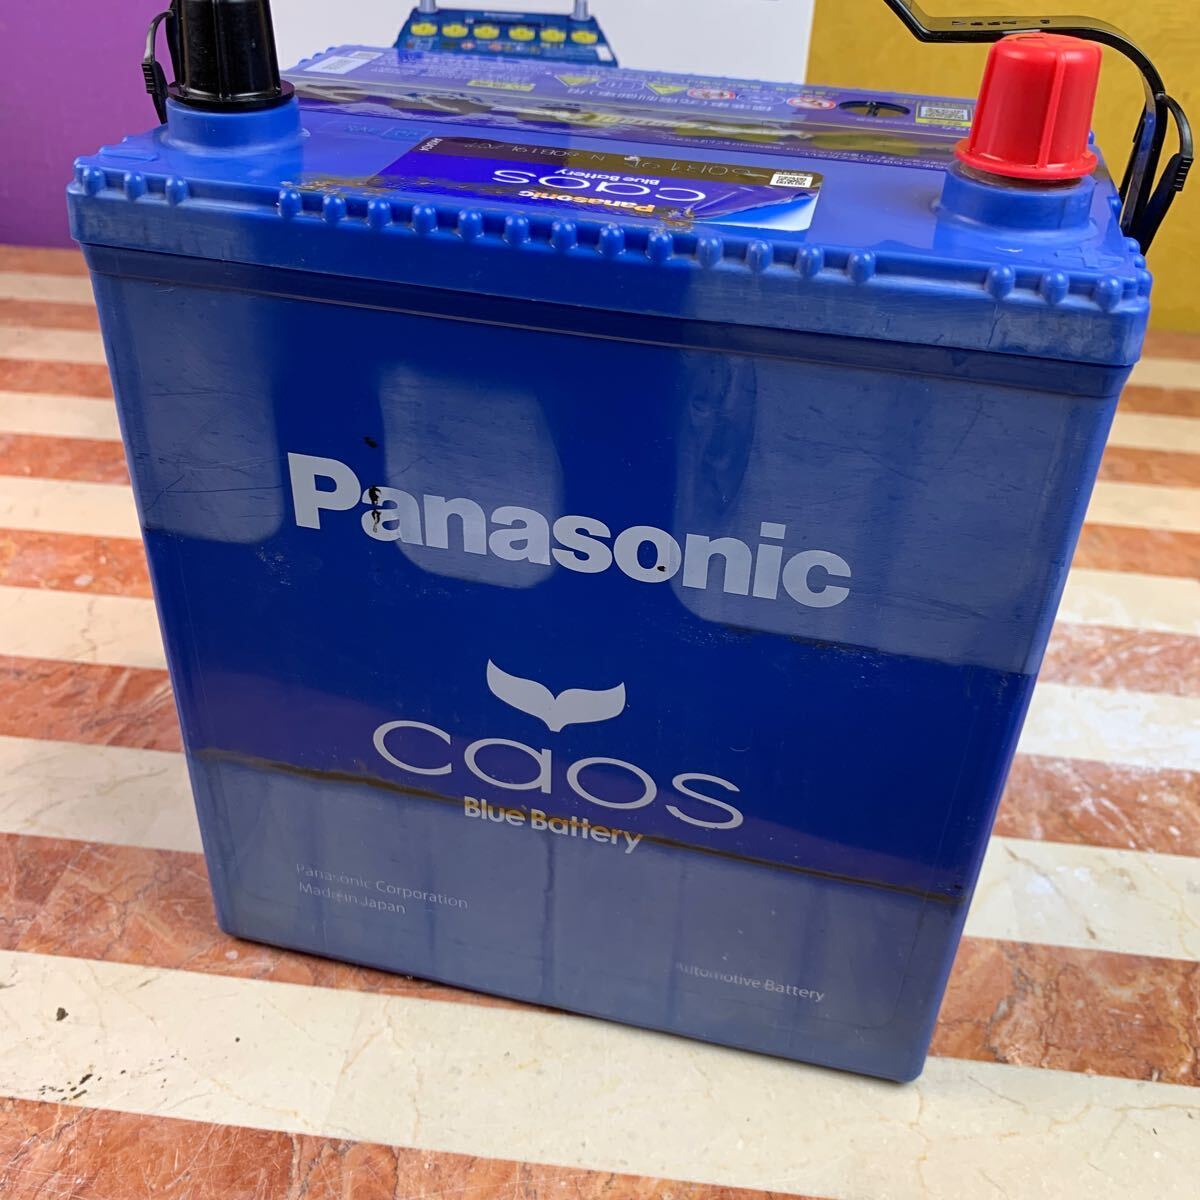 Panasonic パナソニック CAOS カオス60B19L /C7 365CCA 廃棄カーバッテリー無料回収 パルス充電済み バッテリーチェッカー有料にて同梱の画像5